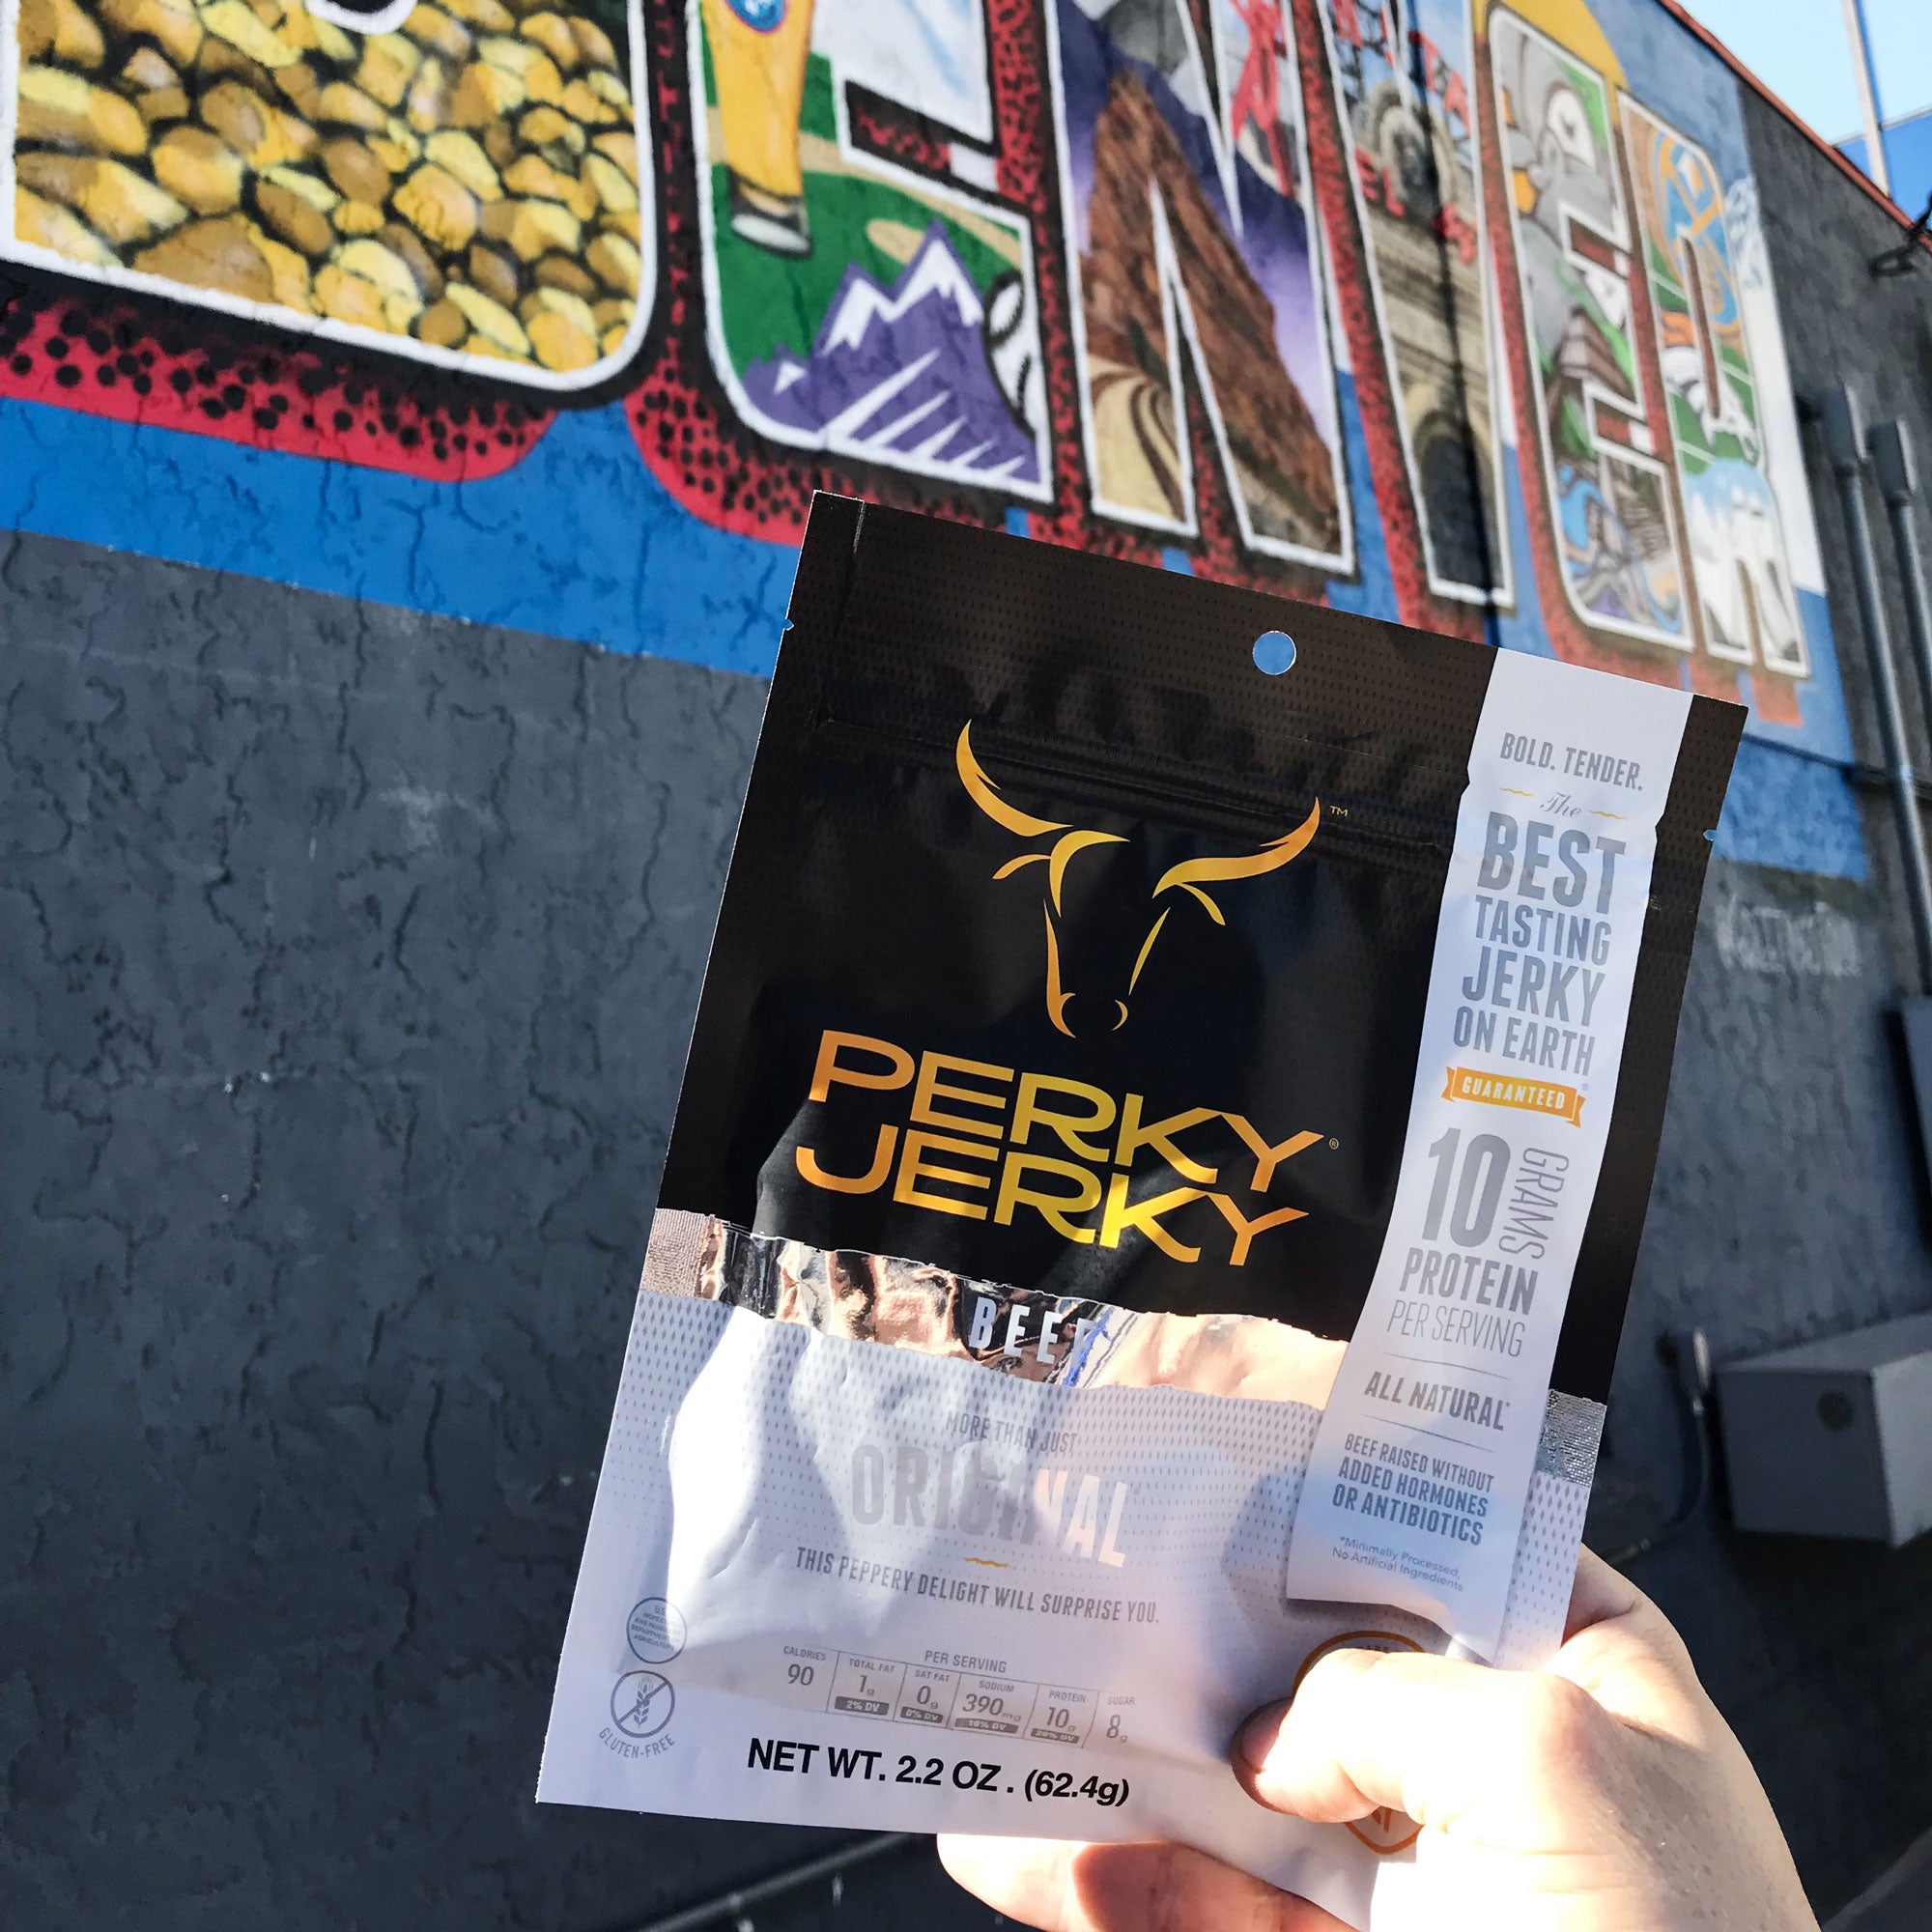 Perky Jerky More Than Just Original Beef 14oz in Denver